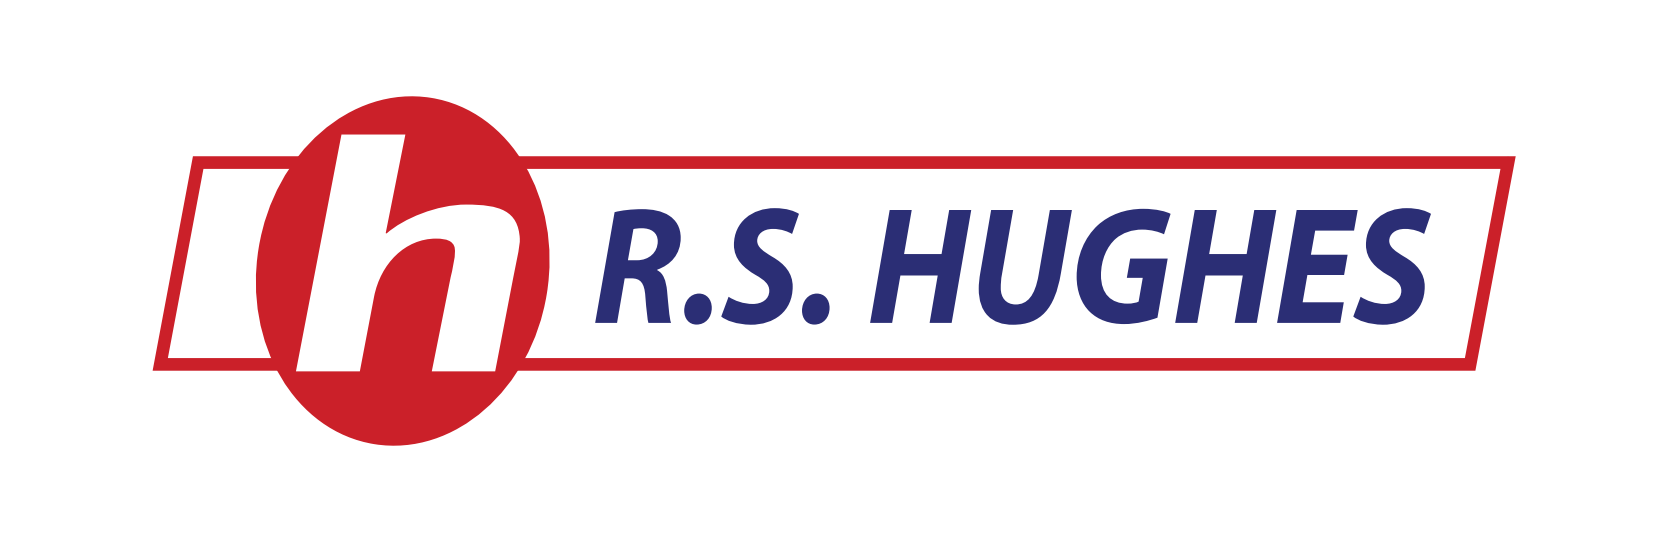 H.R.S. HUGHES logo